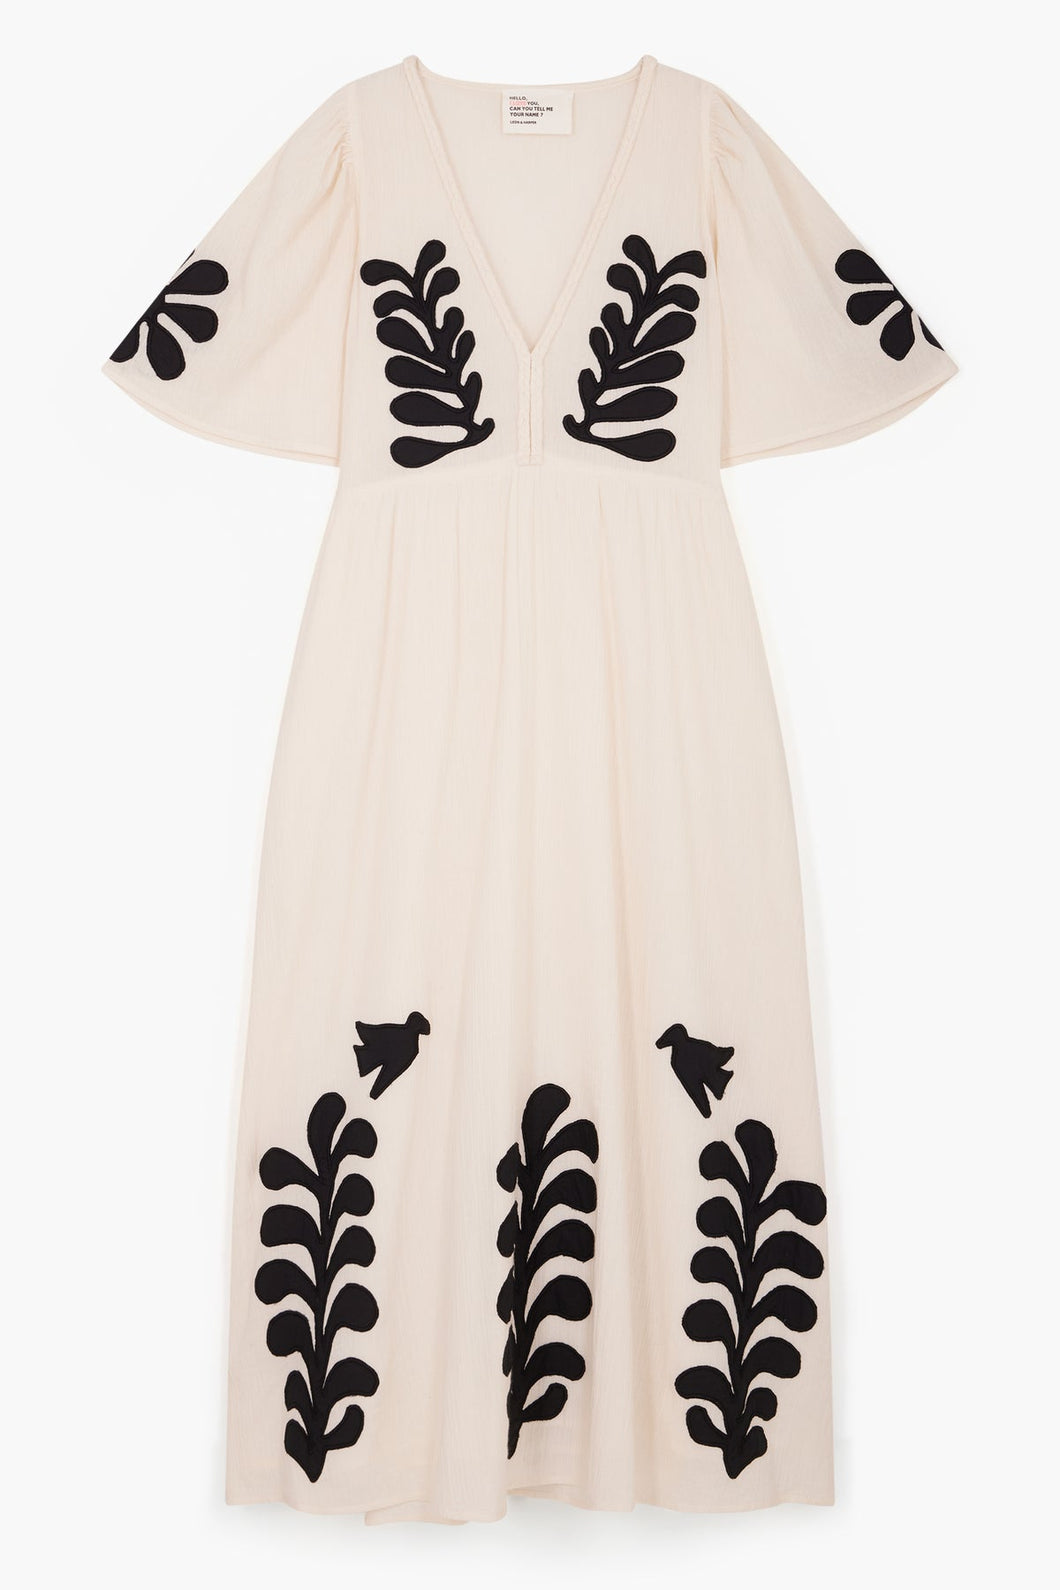 Leon & Harper Roe Birdy + Off White Short Sleeve Dress